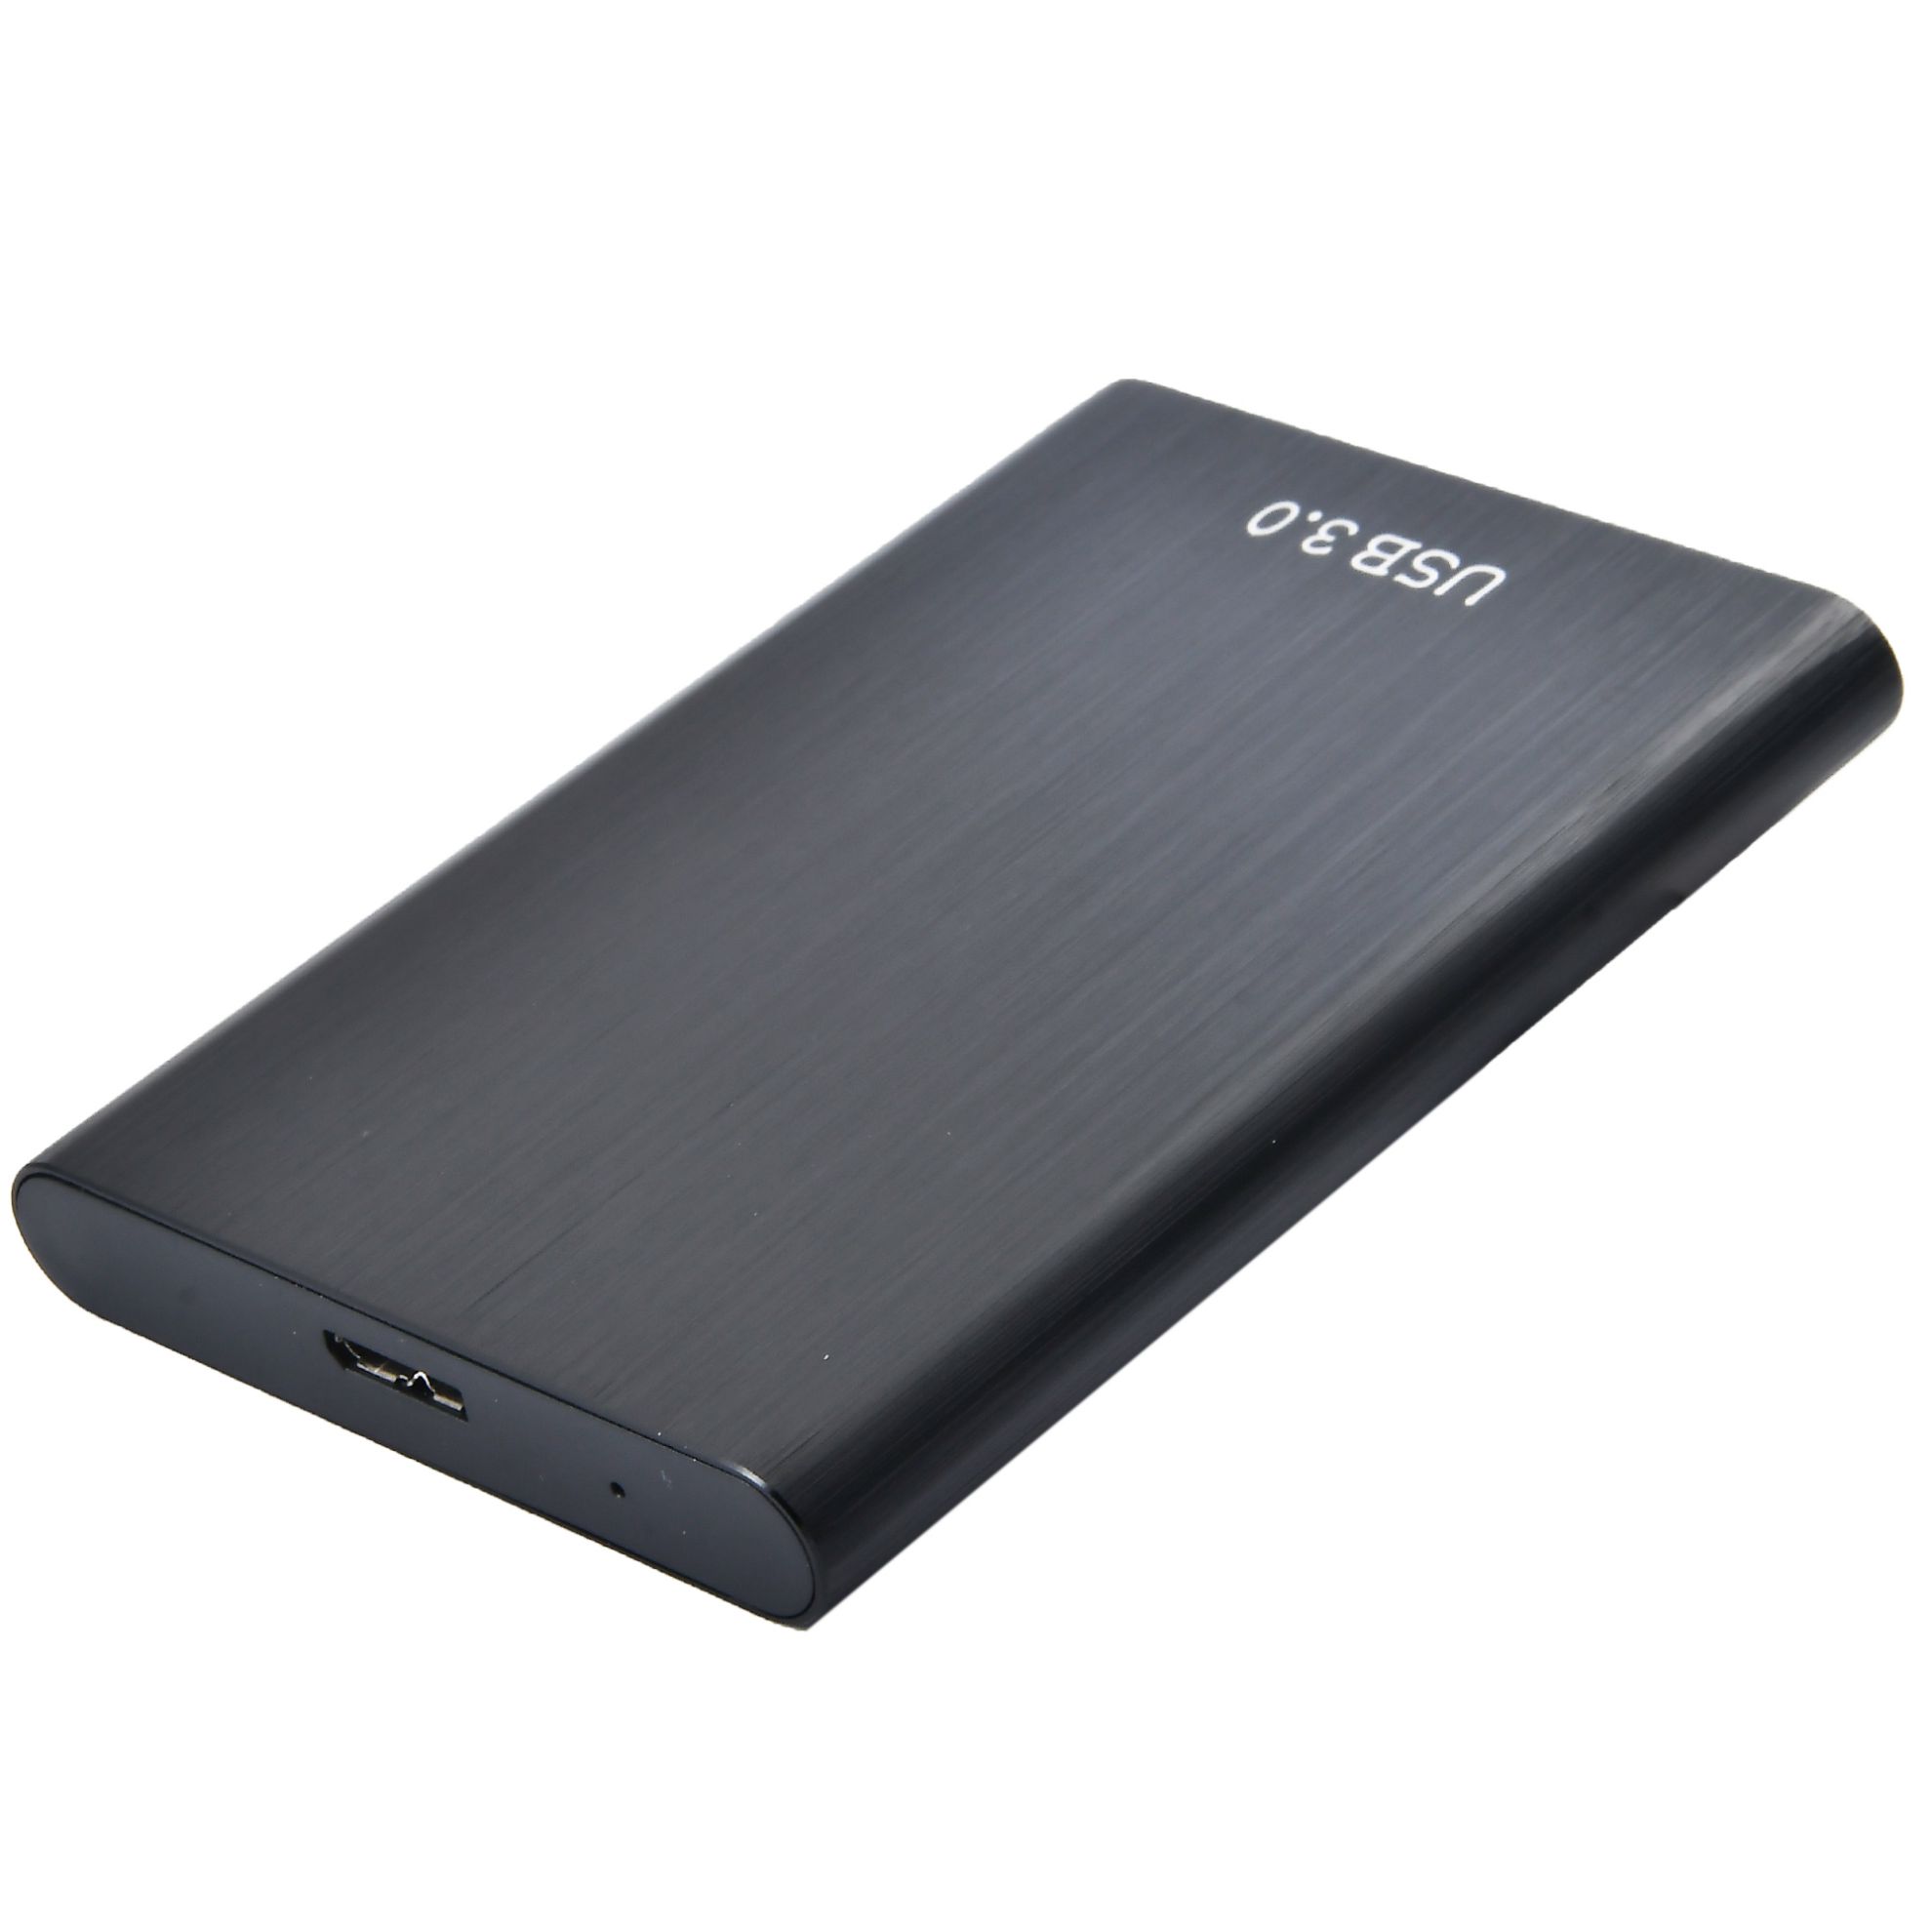 2 TB externe Festplatte, tragbare Festplatte, externe SSD, High-Speed-USB 3.1, kompatibel mit PC, Laptop und Mac